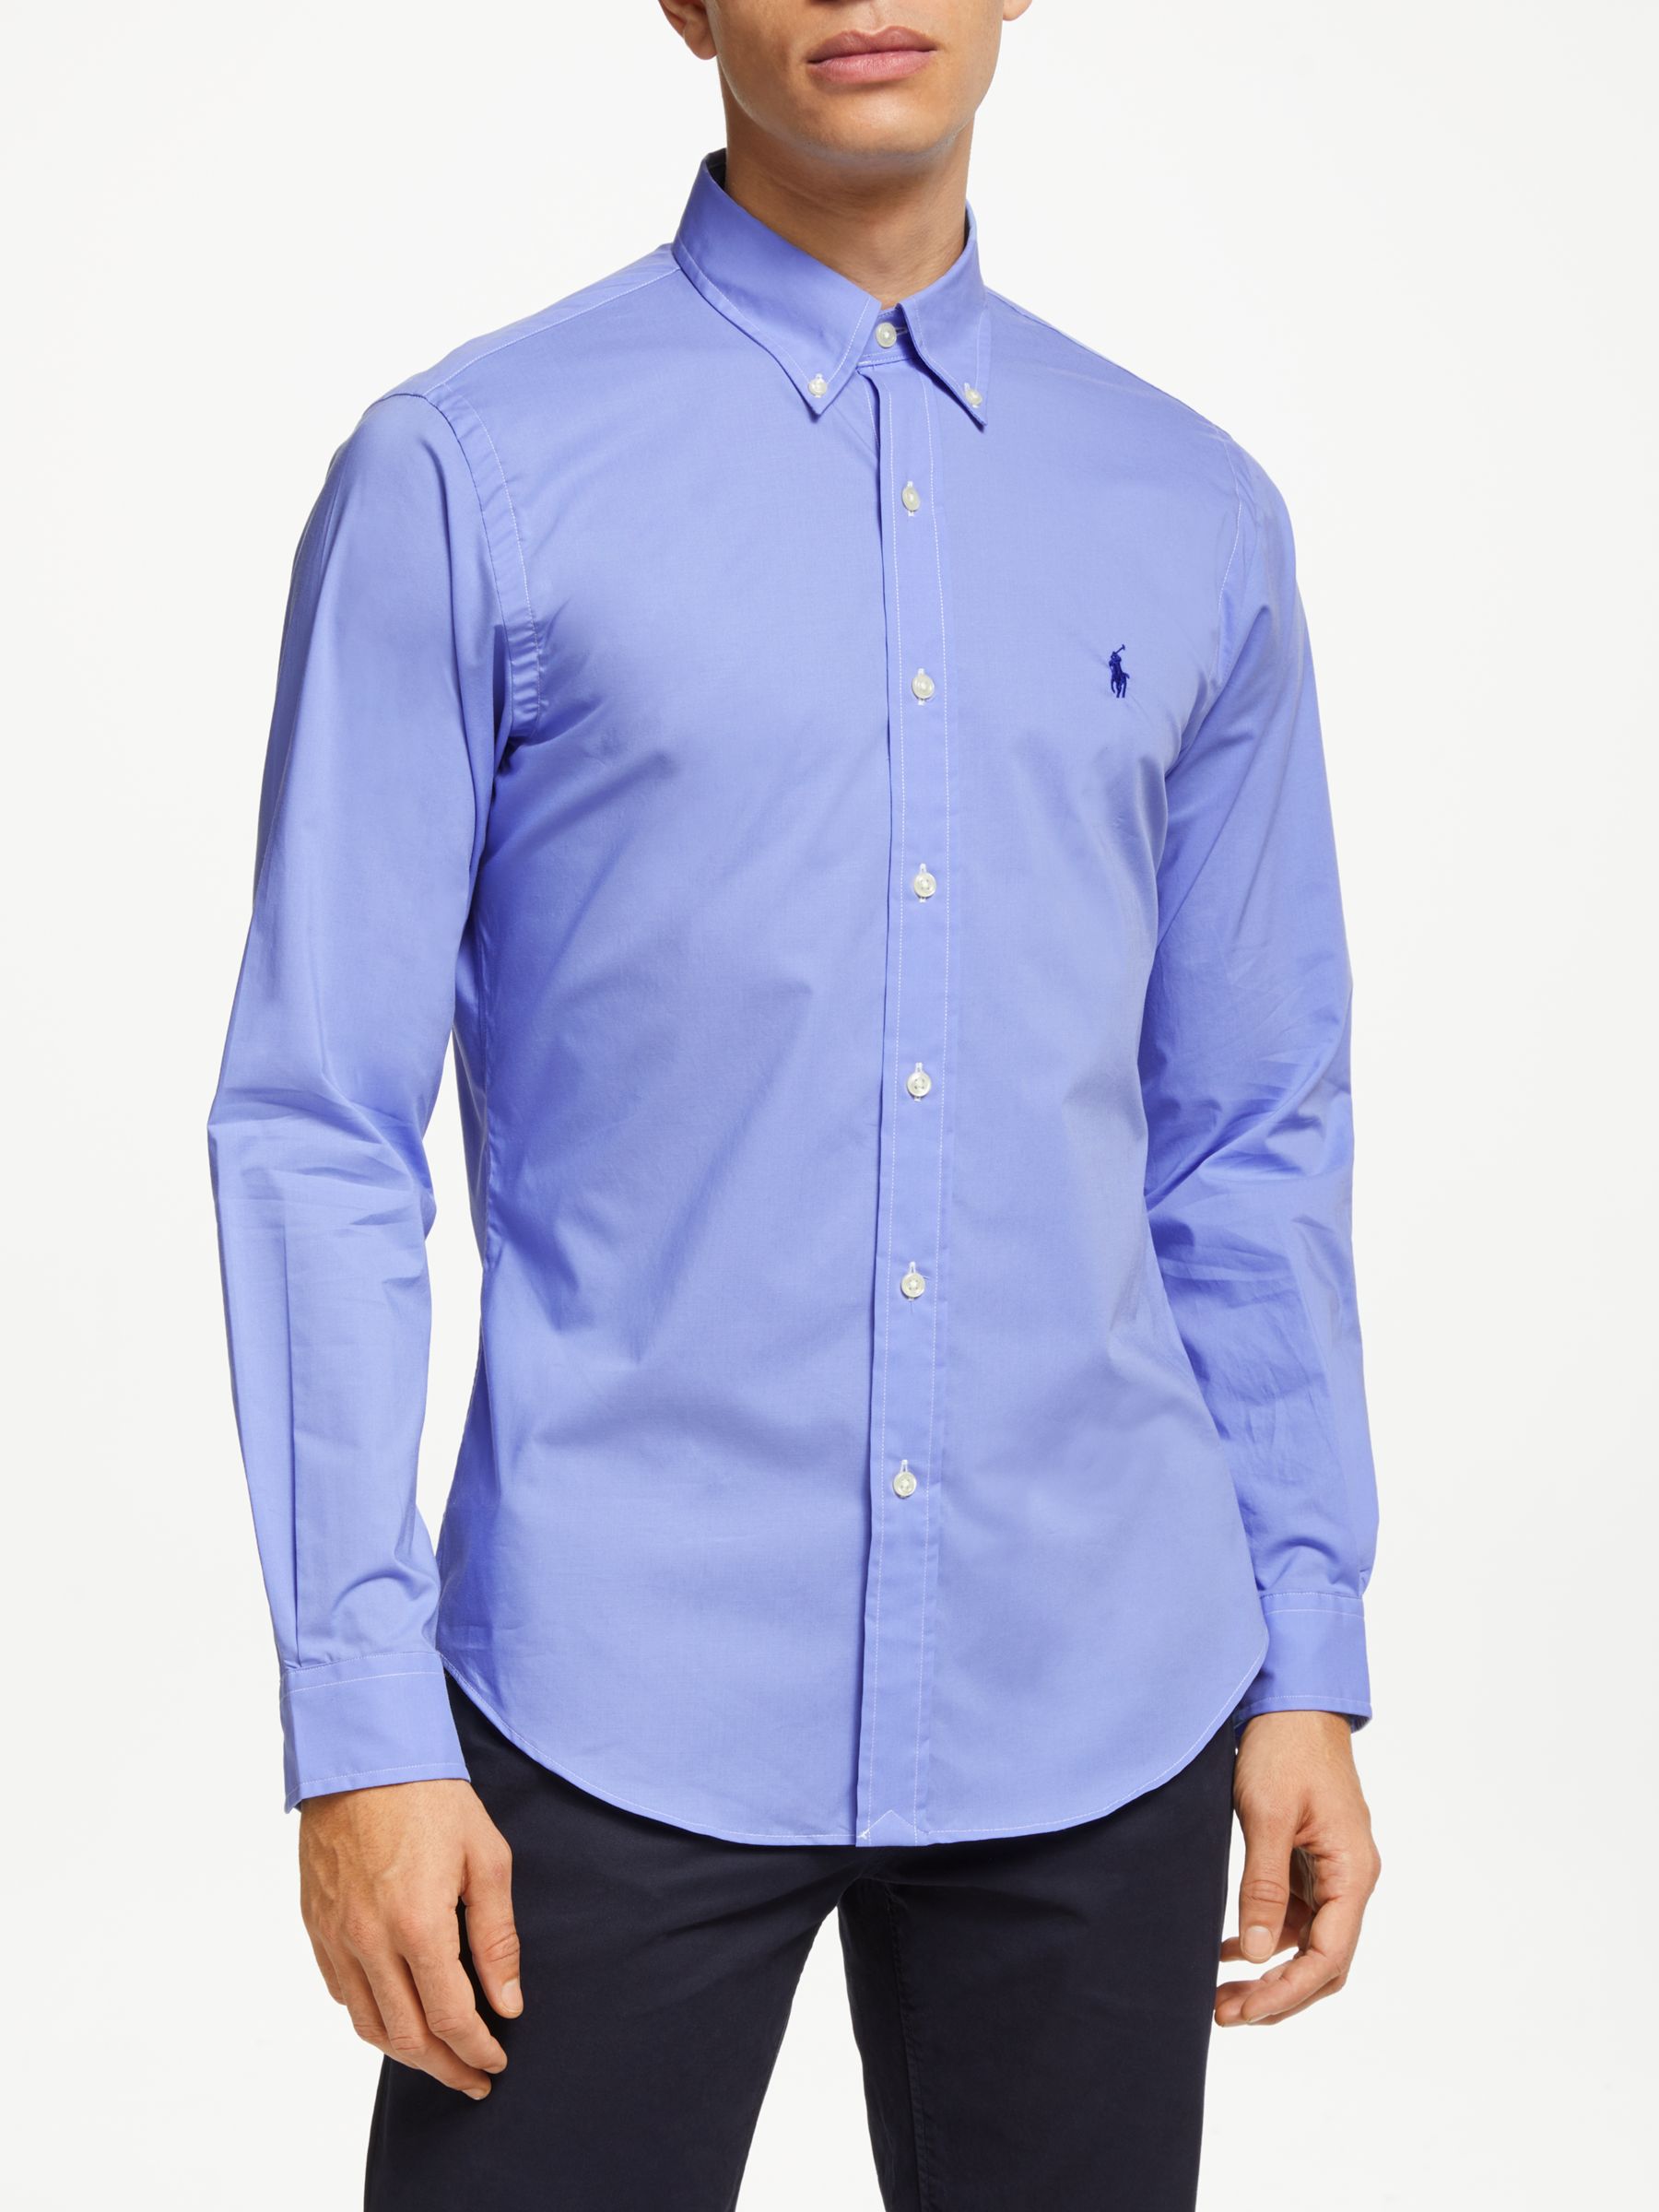 Polo Ralph Lauren Long Sleeve Slim Fit Shirt, Periwinkle Blue at John ...